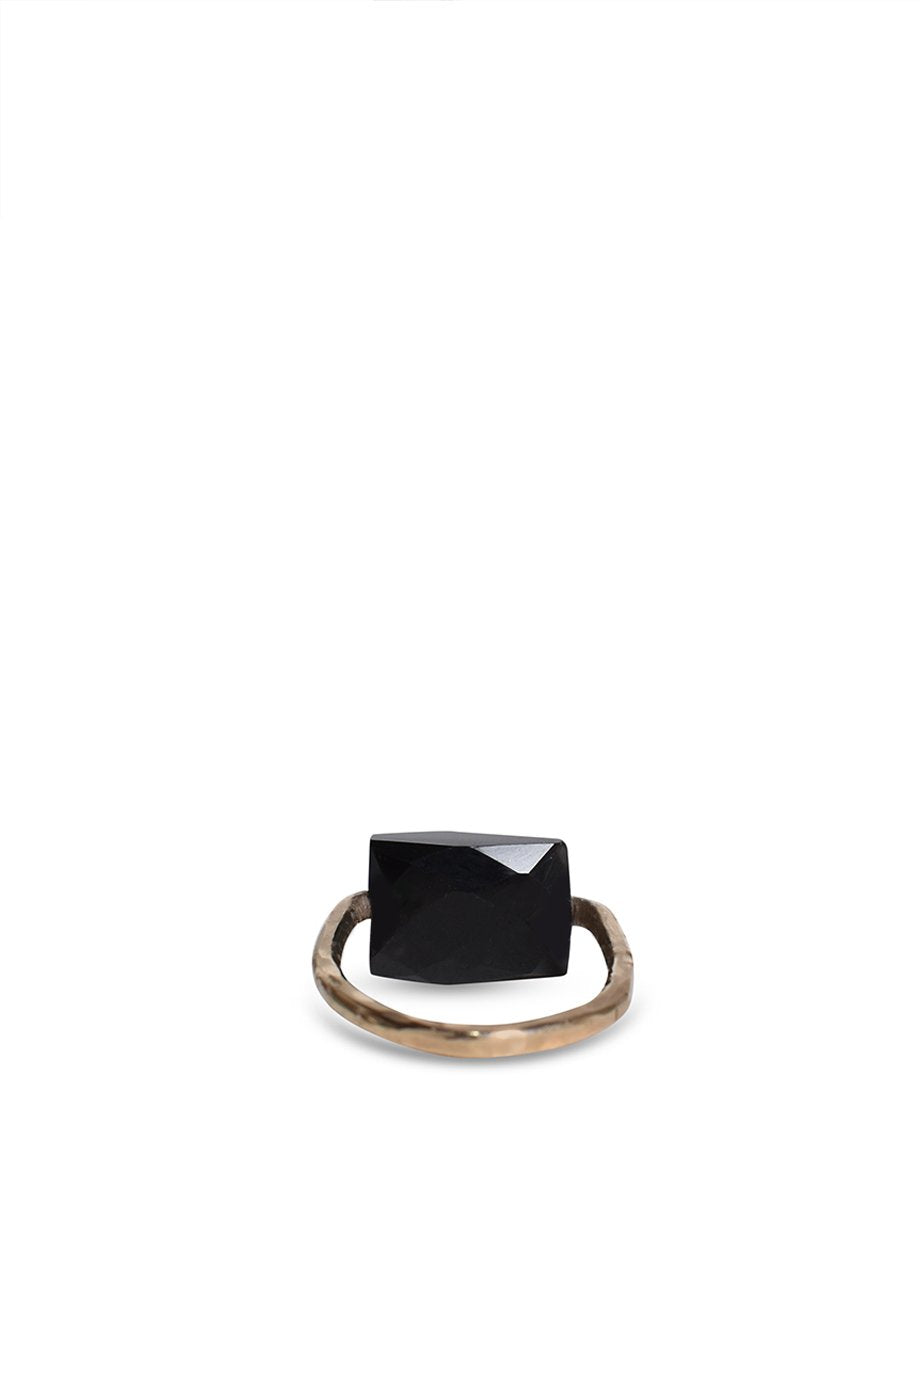 Alouette Design
 Thread Ring - Onyx